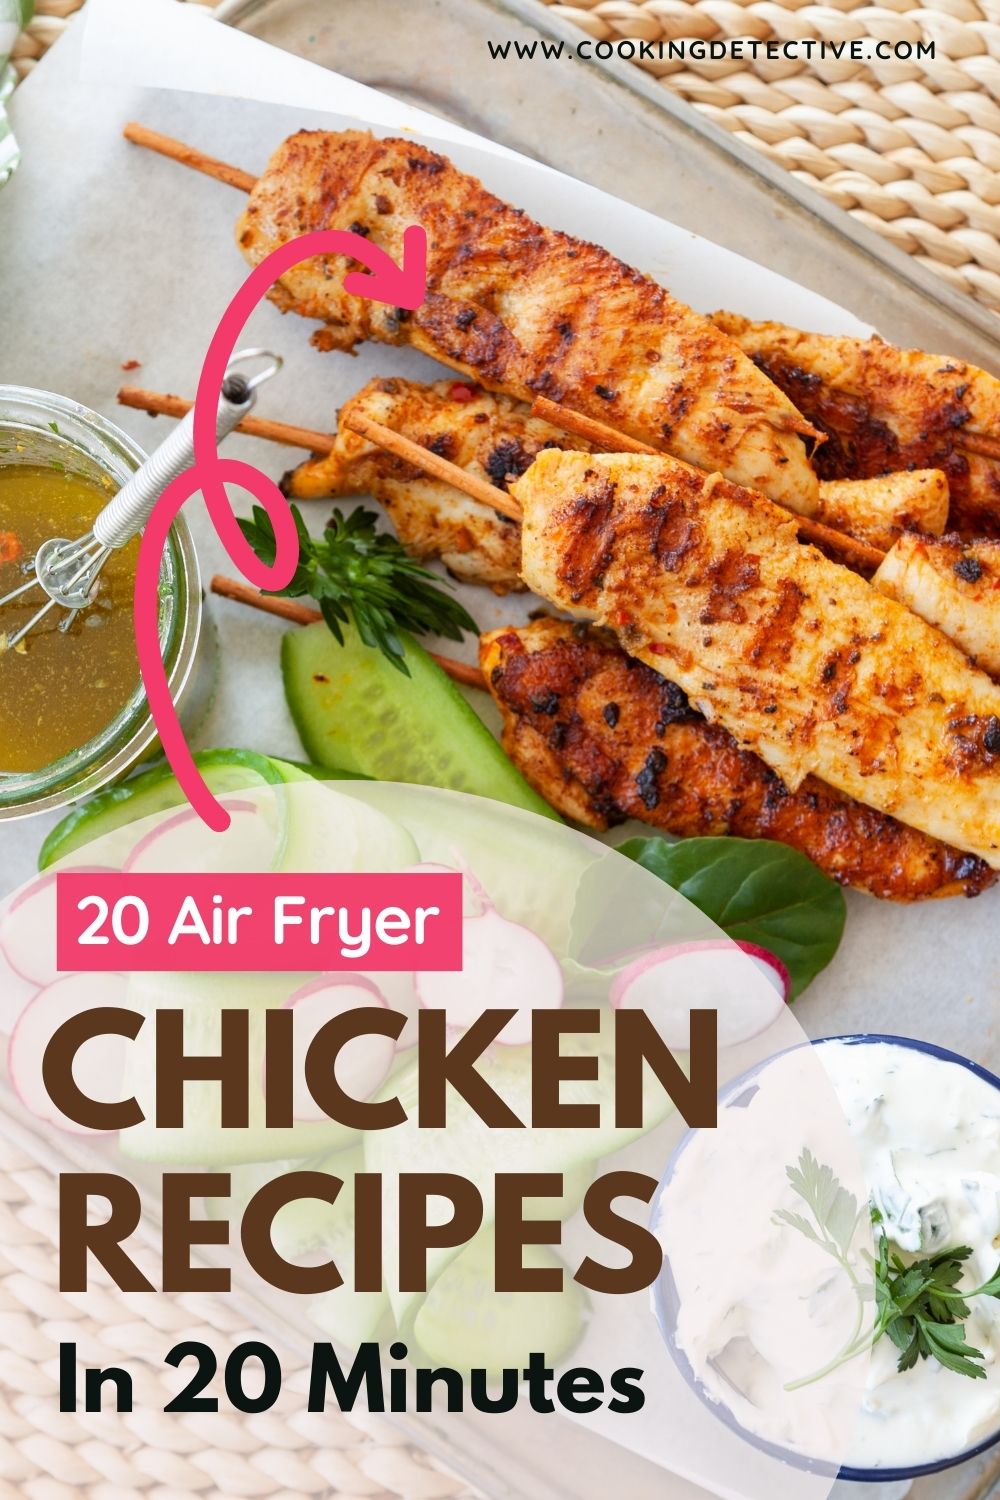 Air Fryer Chicken Recipes in 20 Minutes